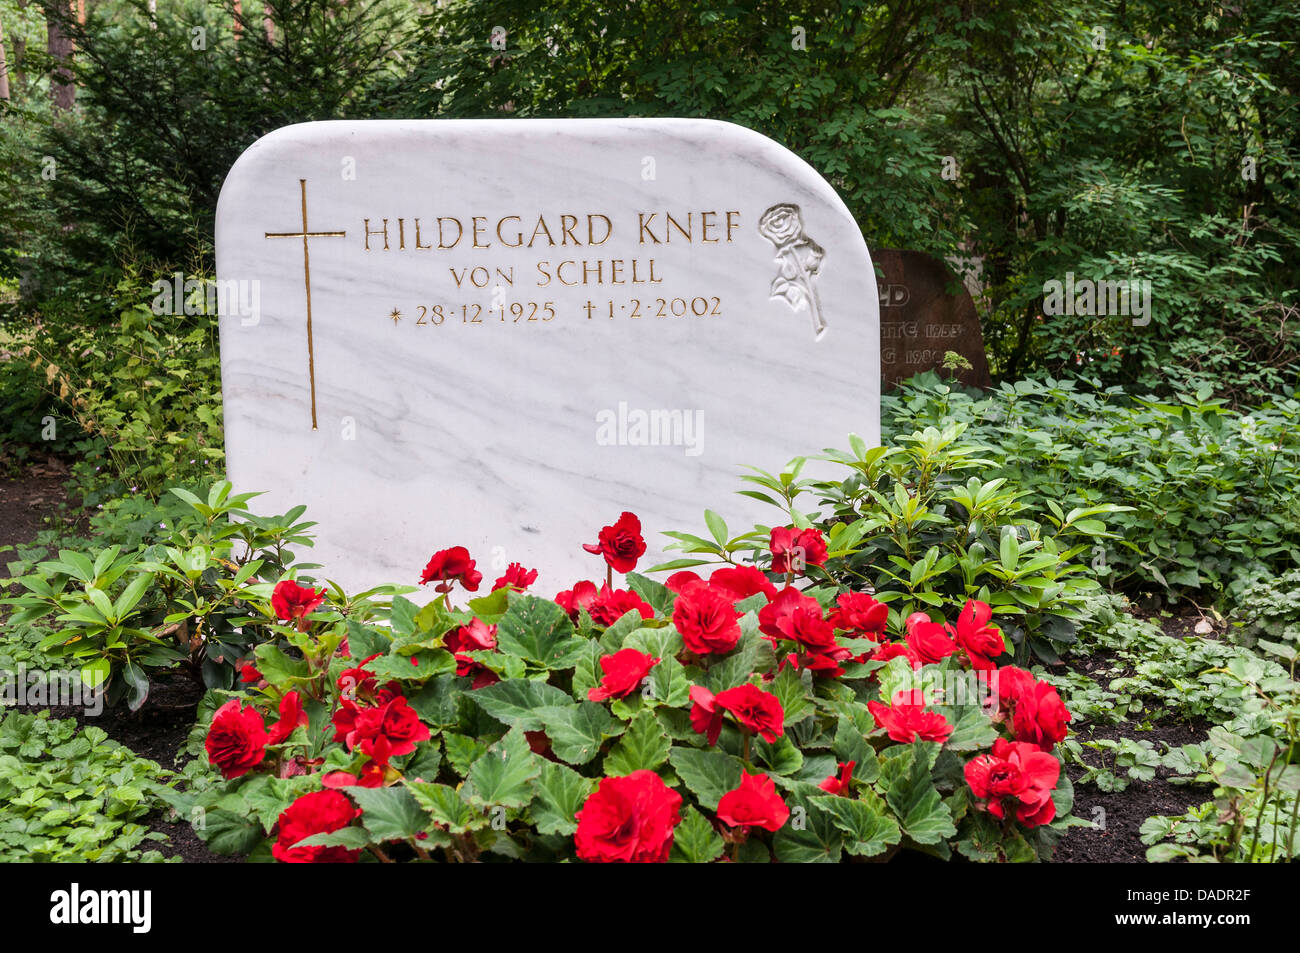 Germany, Berlin, Memorial grave of Hildegard Knef Stock Photo